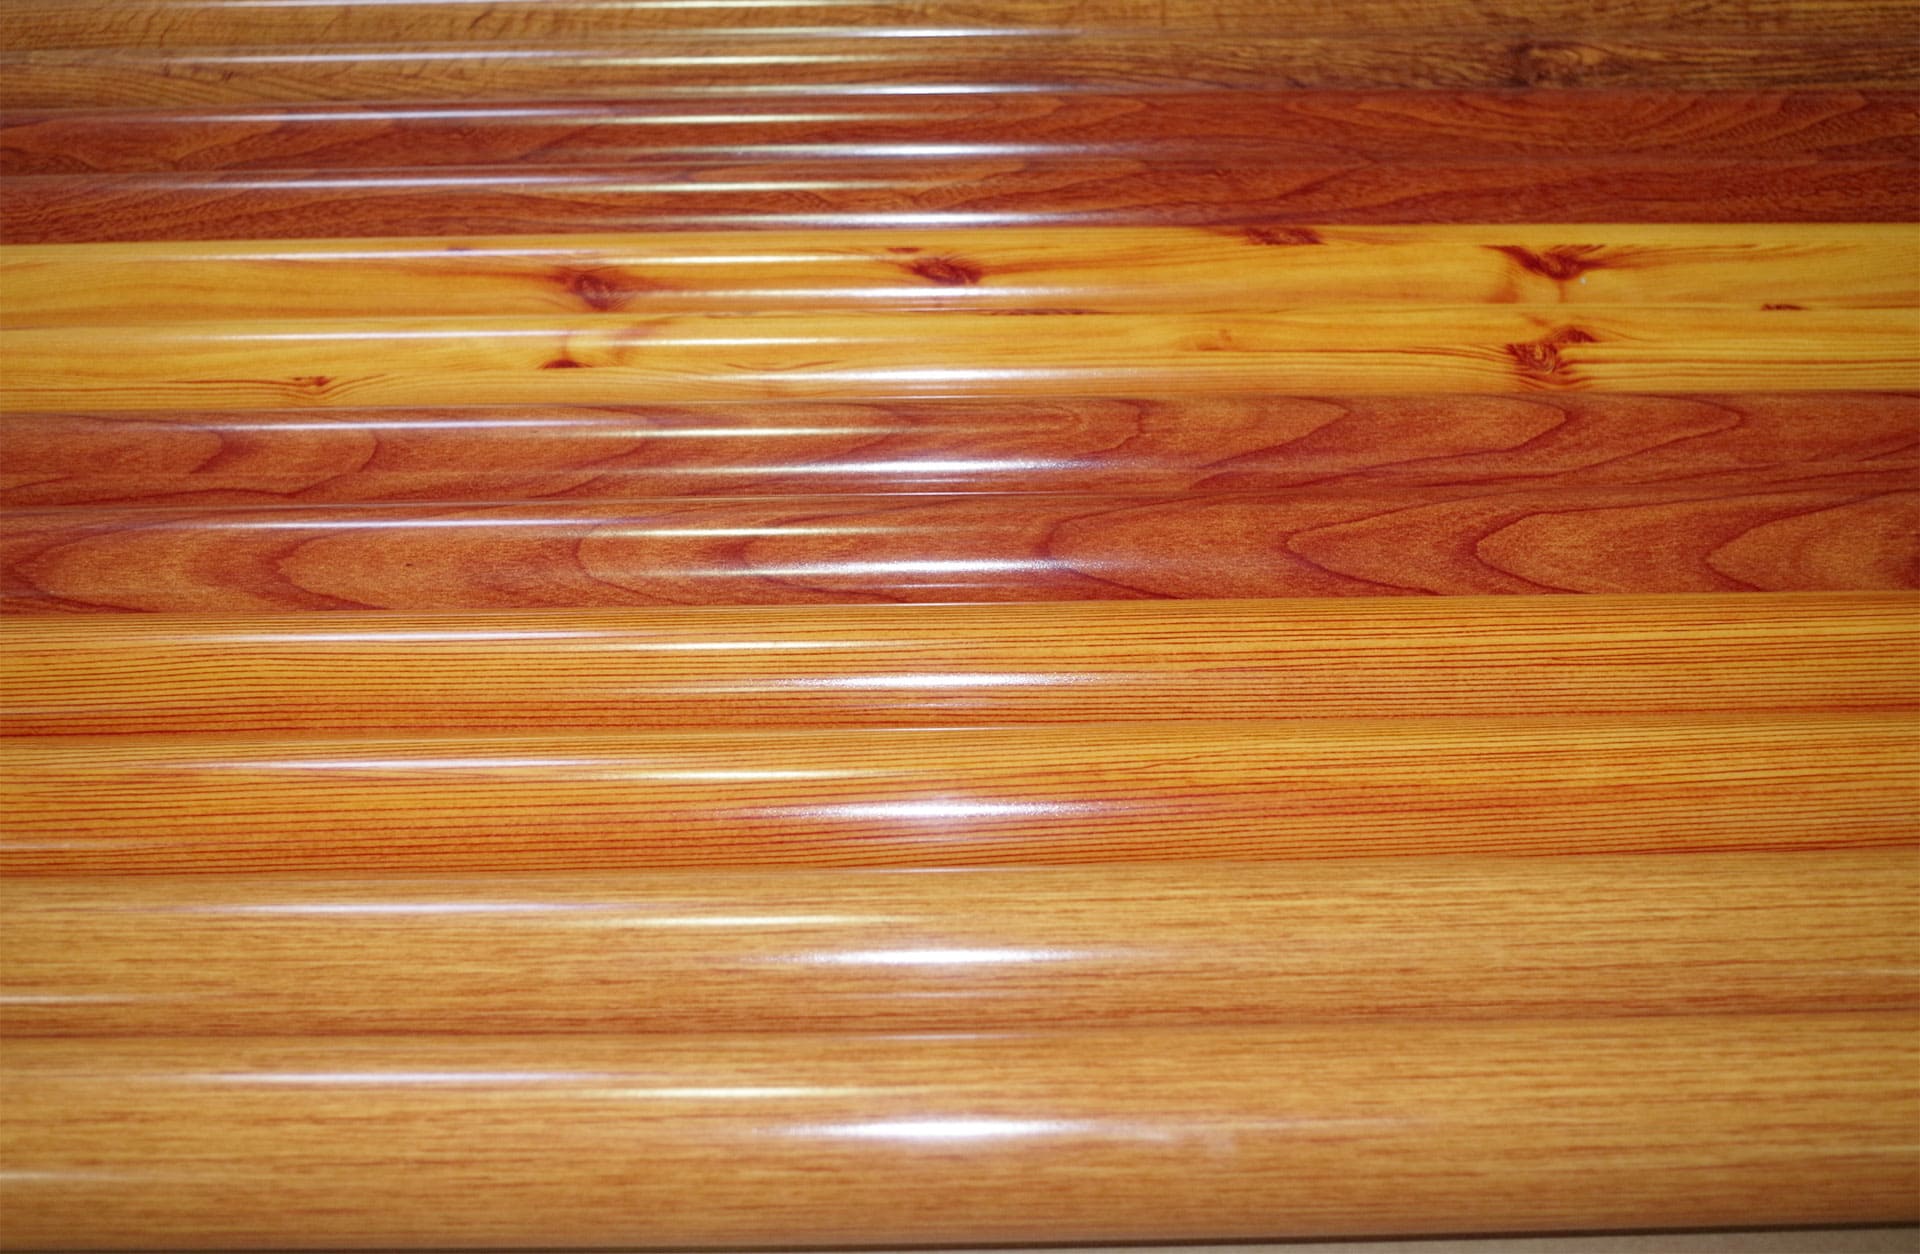 wood grain examples